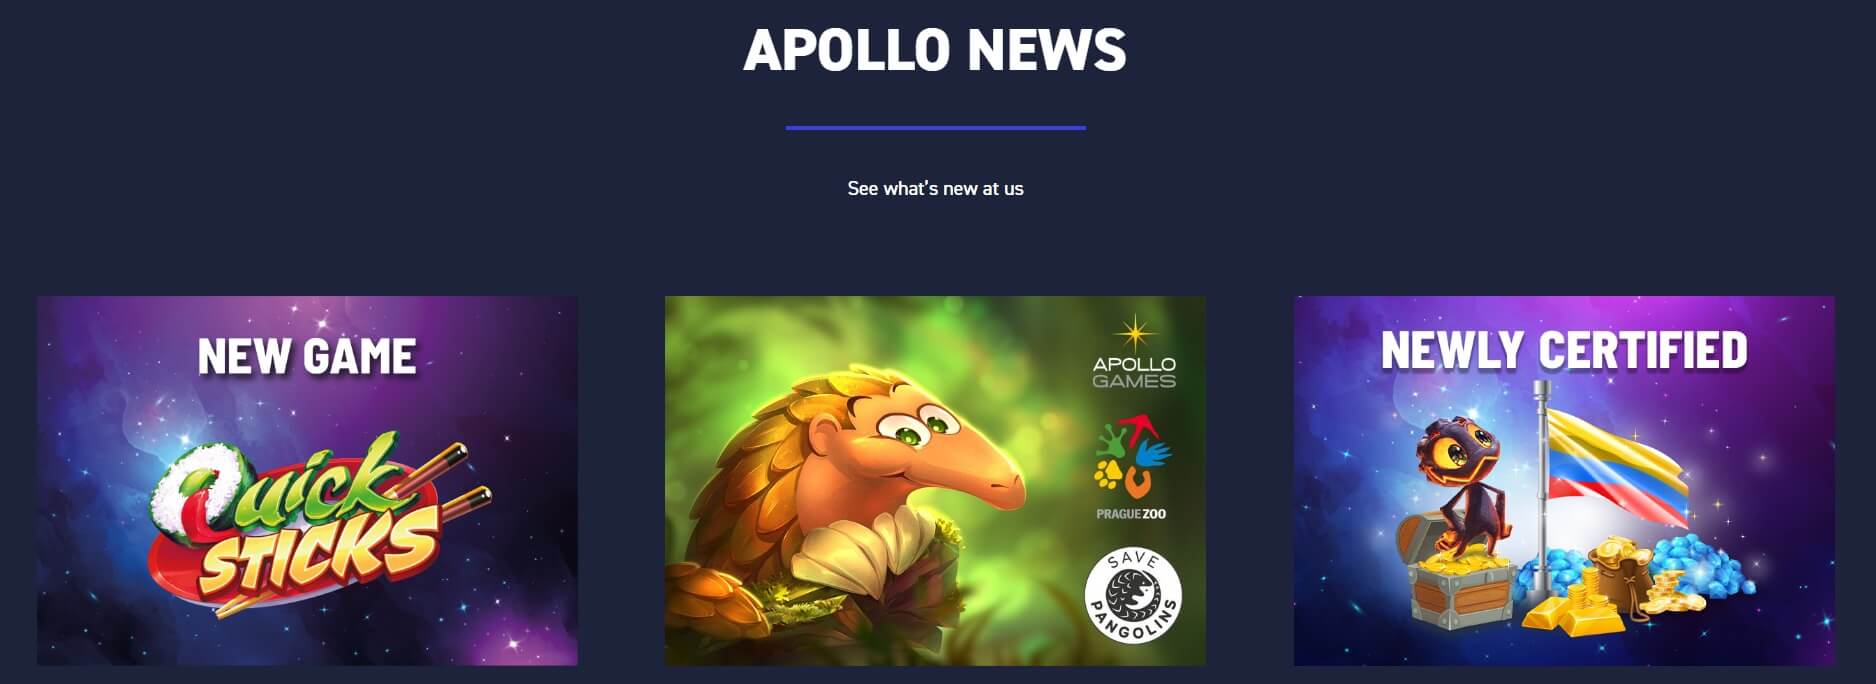 gry Apollo Games screenshot